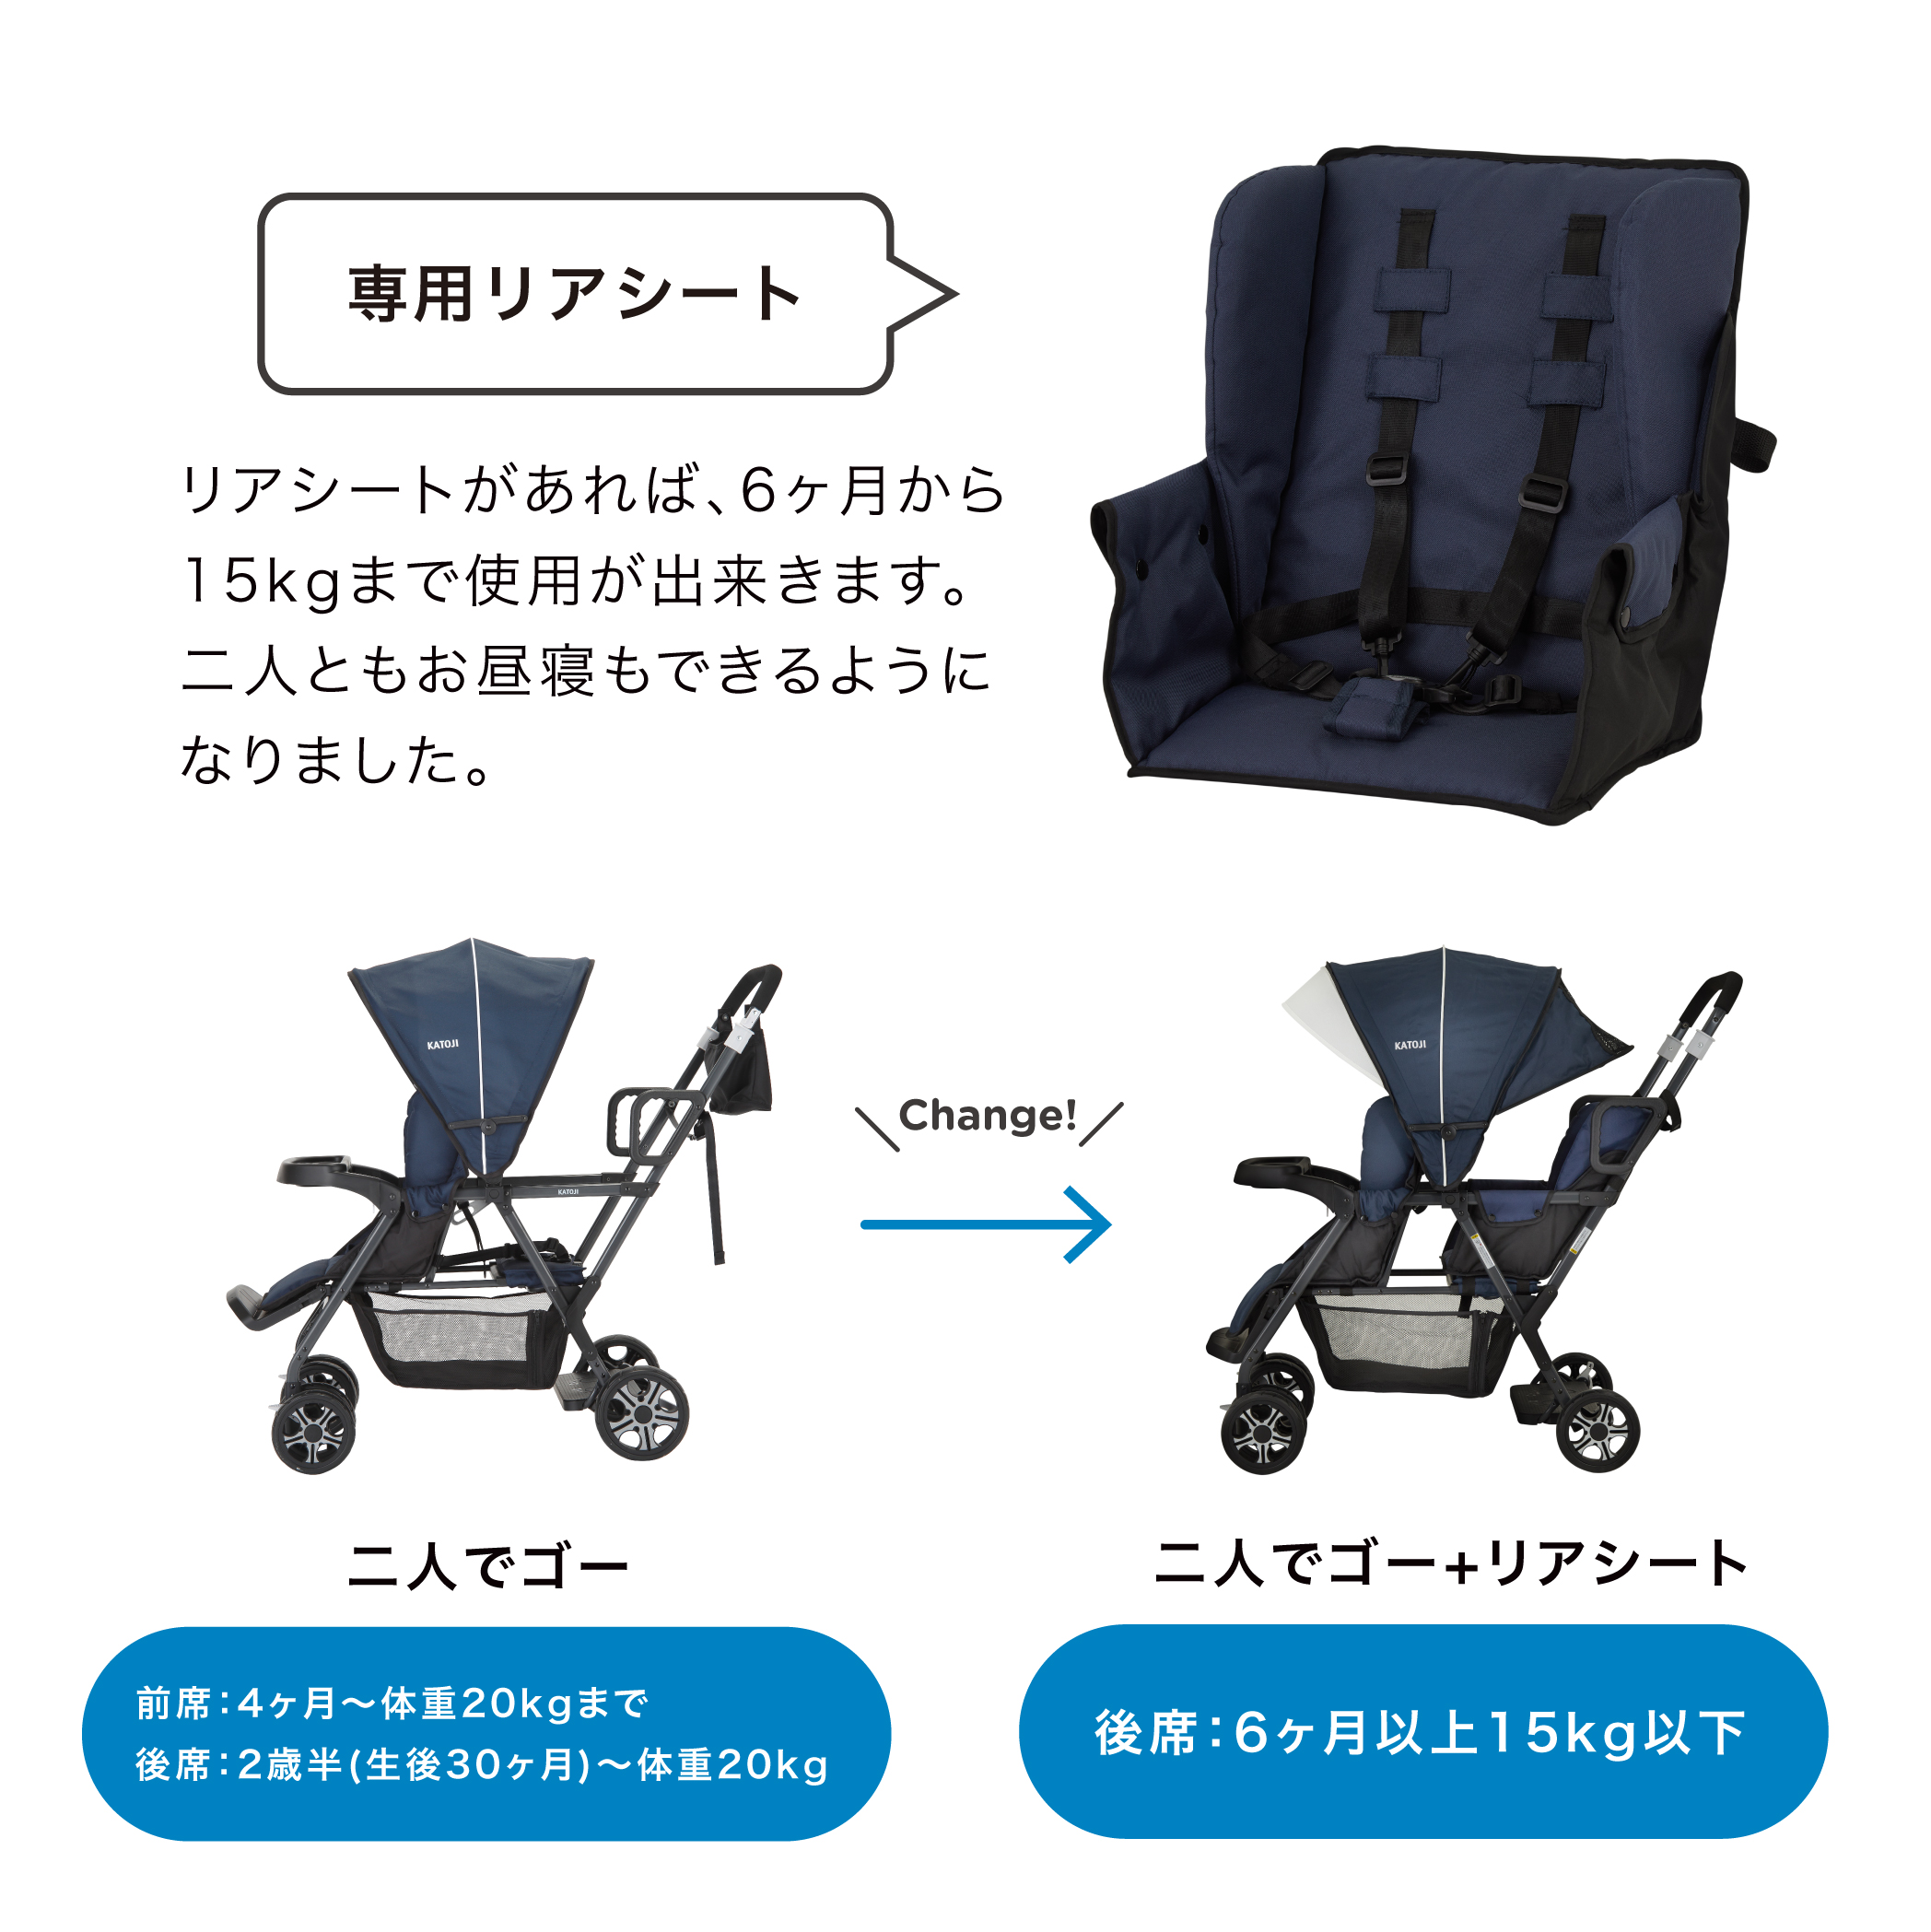 KATOJI 2-seater リアシート 説明ページ - 外出/移動用品